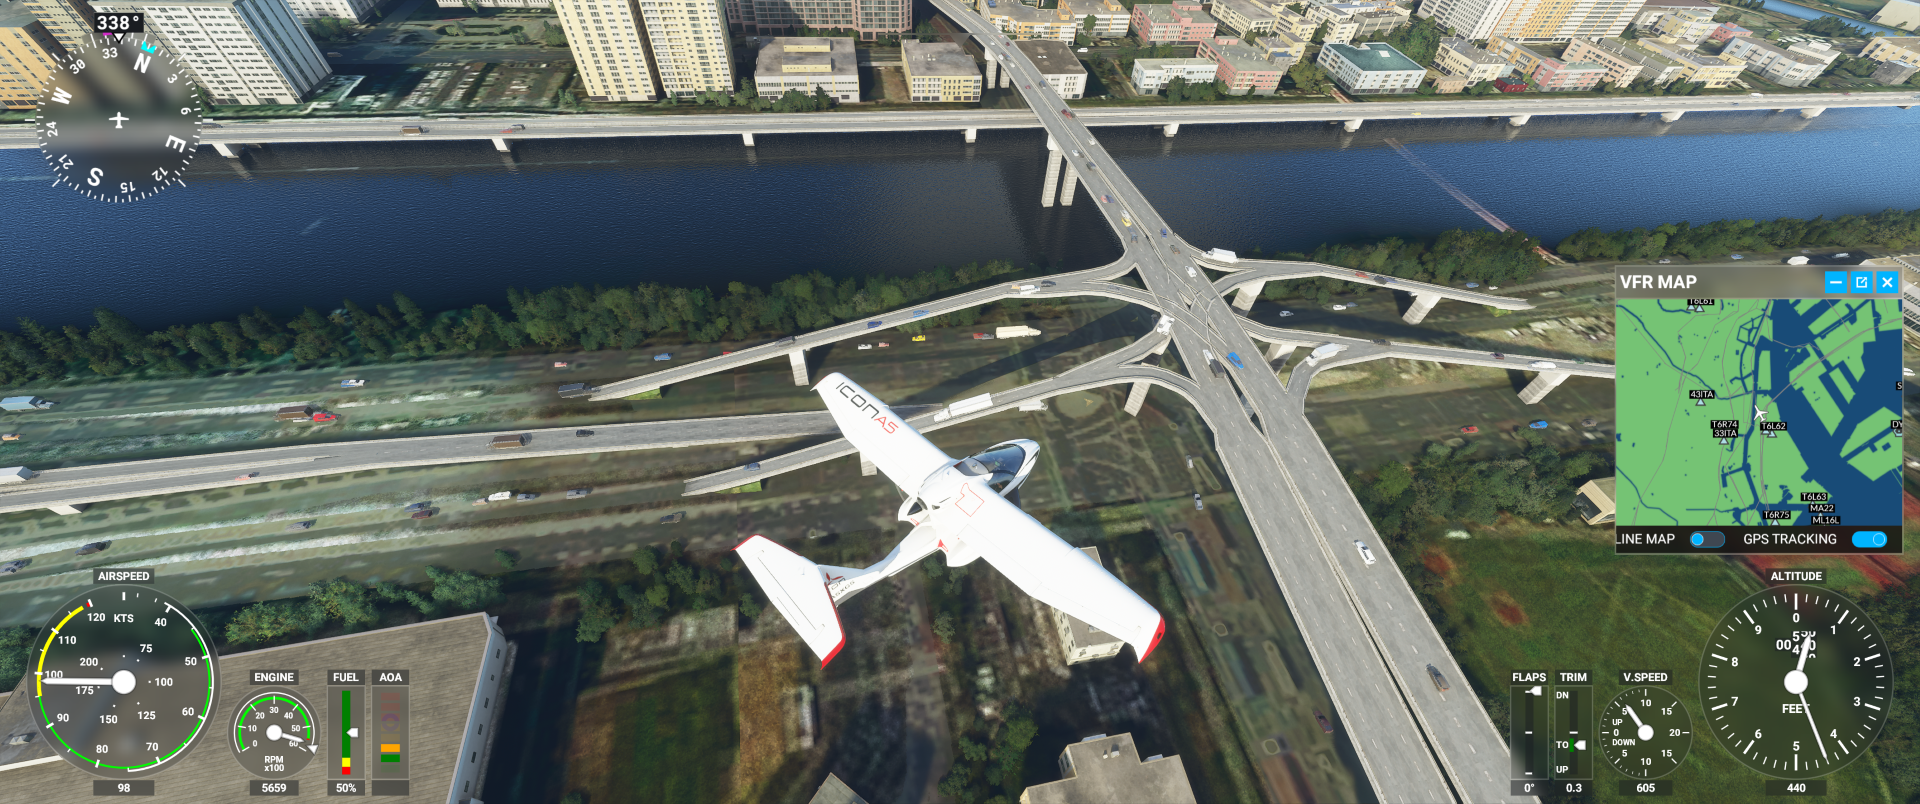 Microsoft Flight Simulator Screenshot 2020.10.02 - 20.19.21.25_klein.png